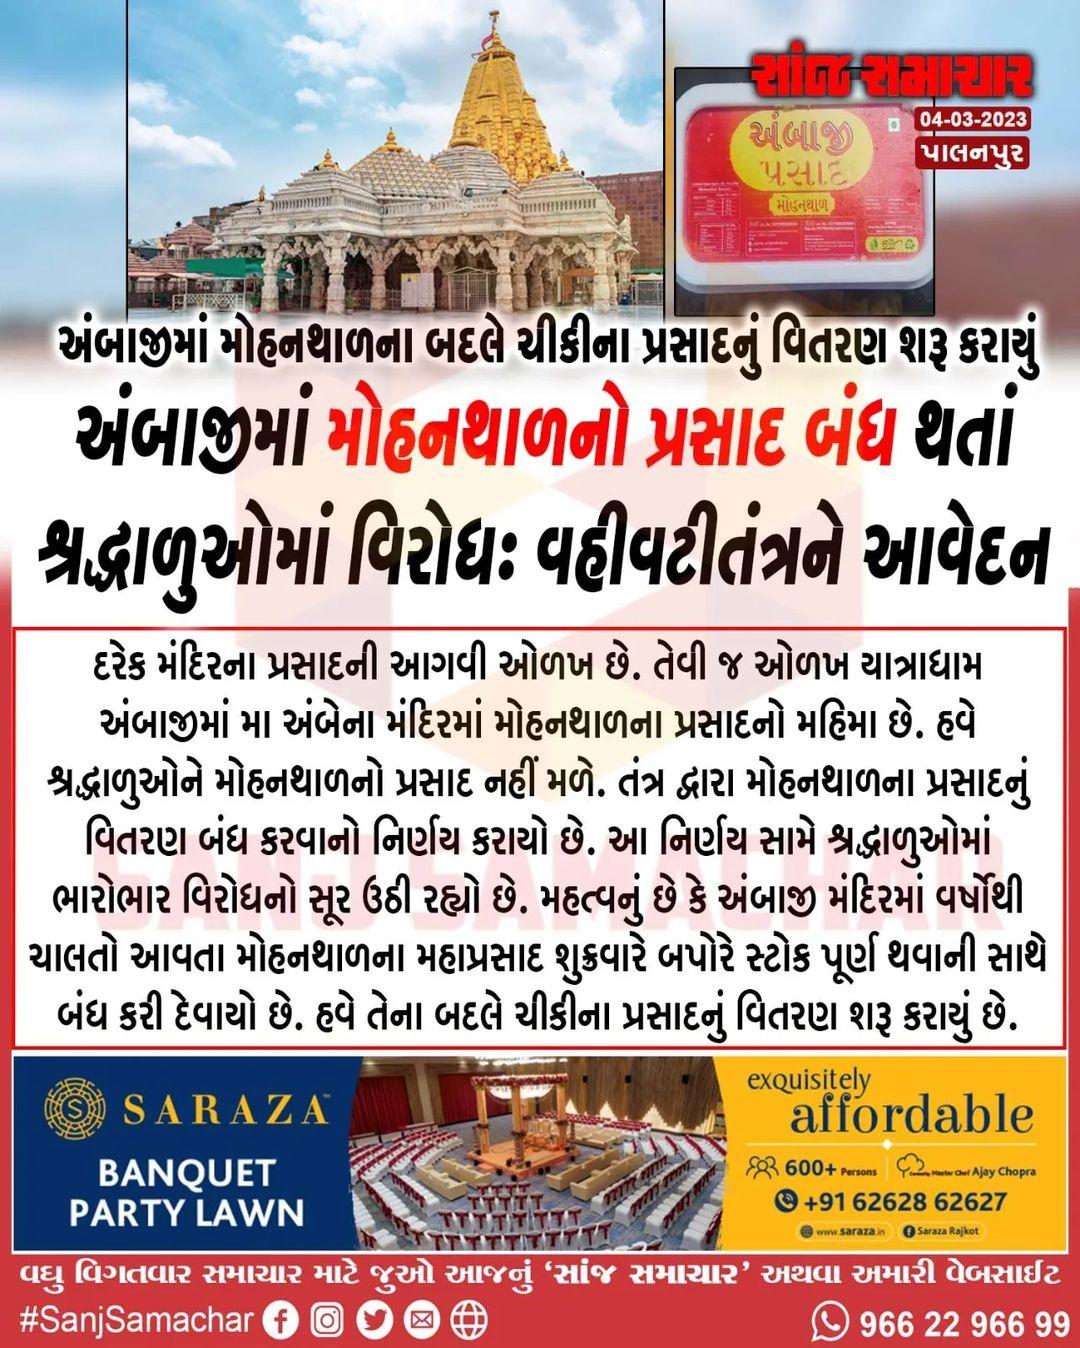 class="content__text"
 #Ambaji #Gujarat #Gujaratinews #Sanjsamachar #Newsupdate #newstile #NewsAlert #Newslive #newsnow #newsoftheday #morbi #junagadh #rajkot #Saurashtra #postoffice 
 